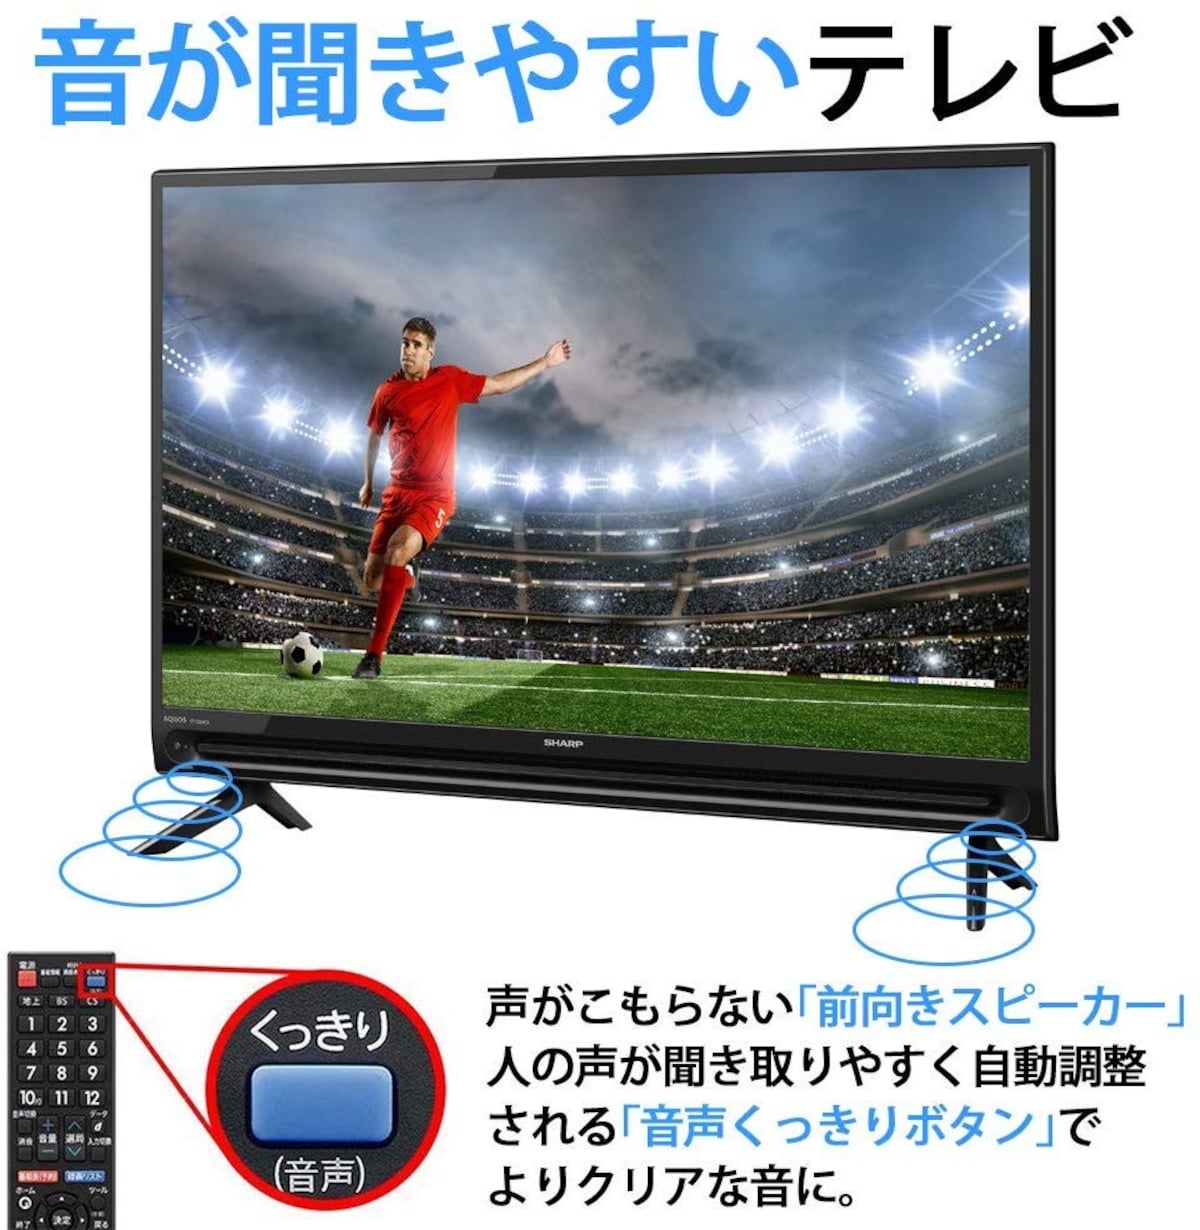  32V型 液晶テレビ AQUOS画像3 